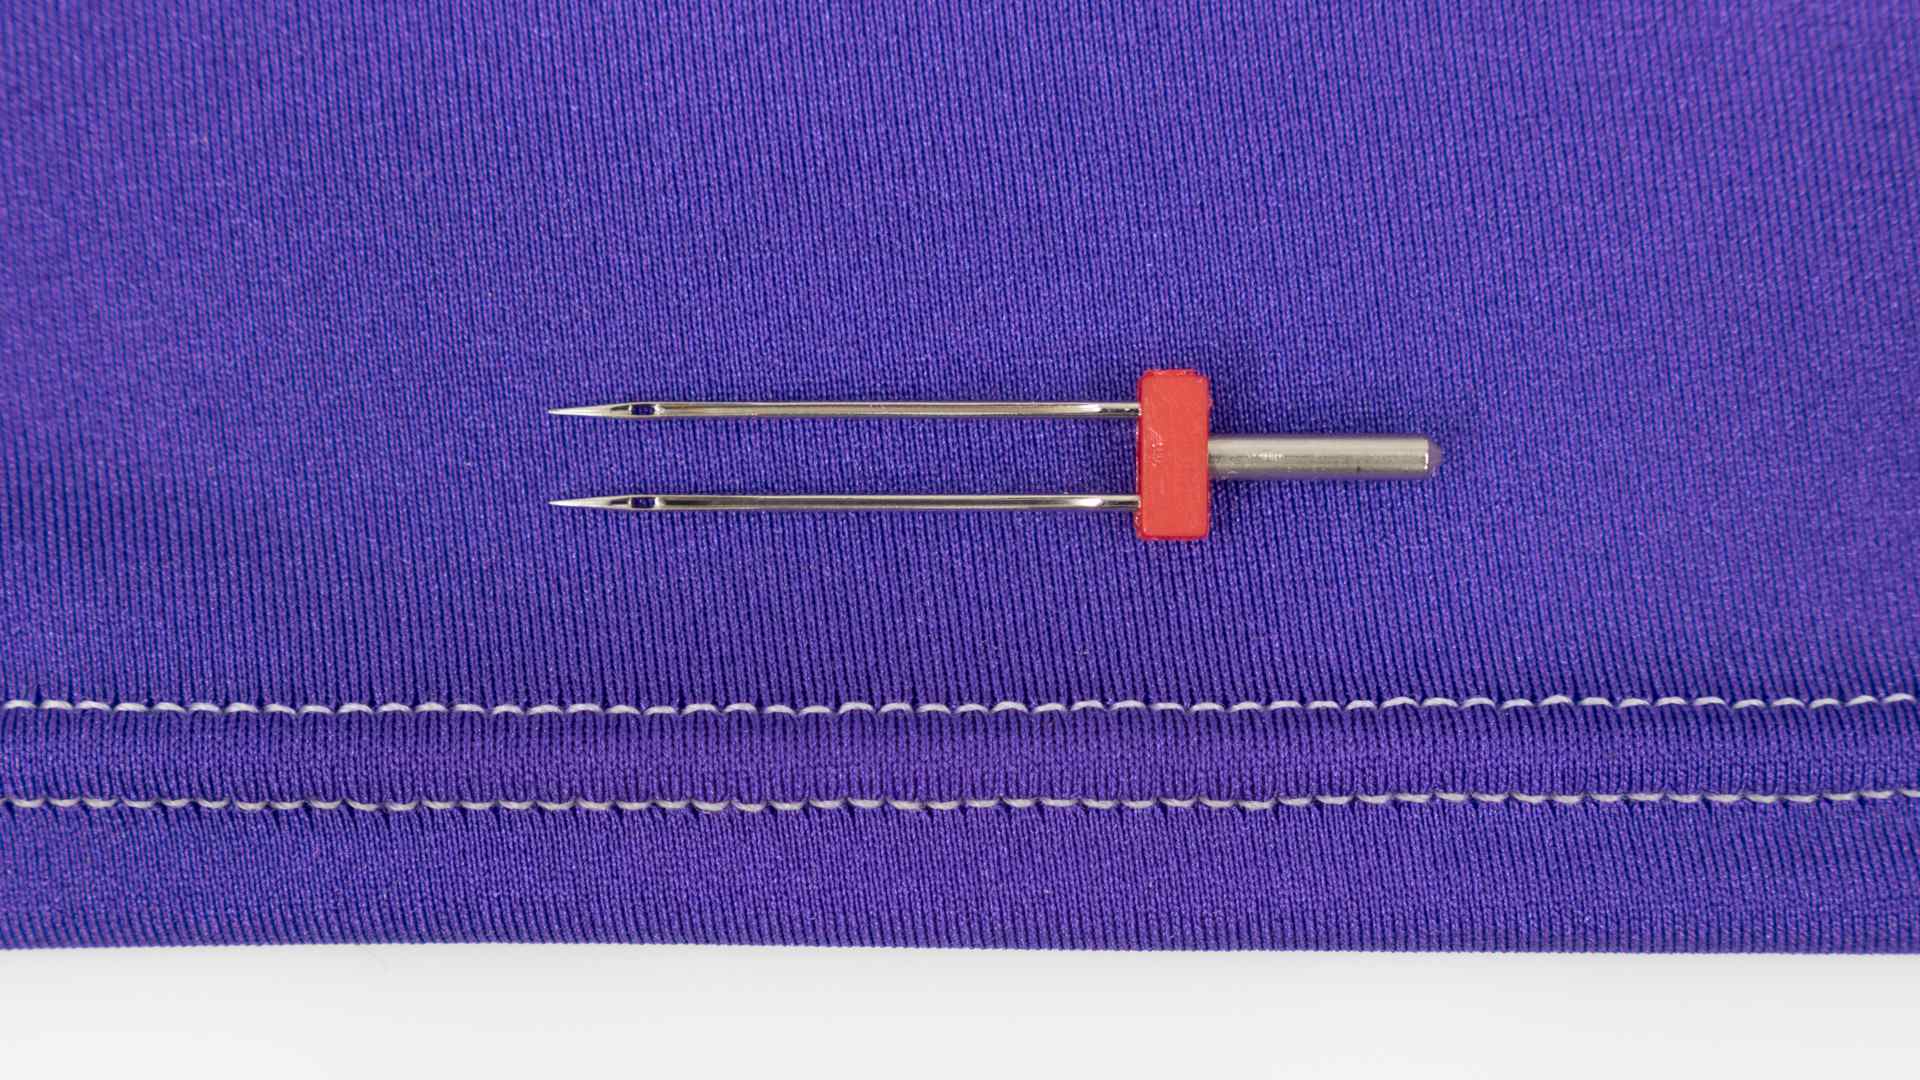 Tutorial: Twin Needle Sewing